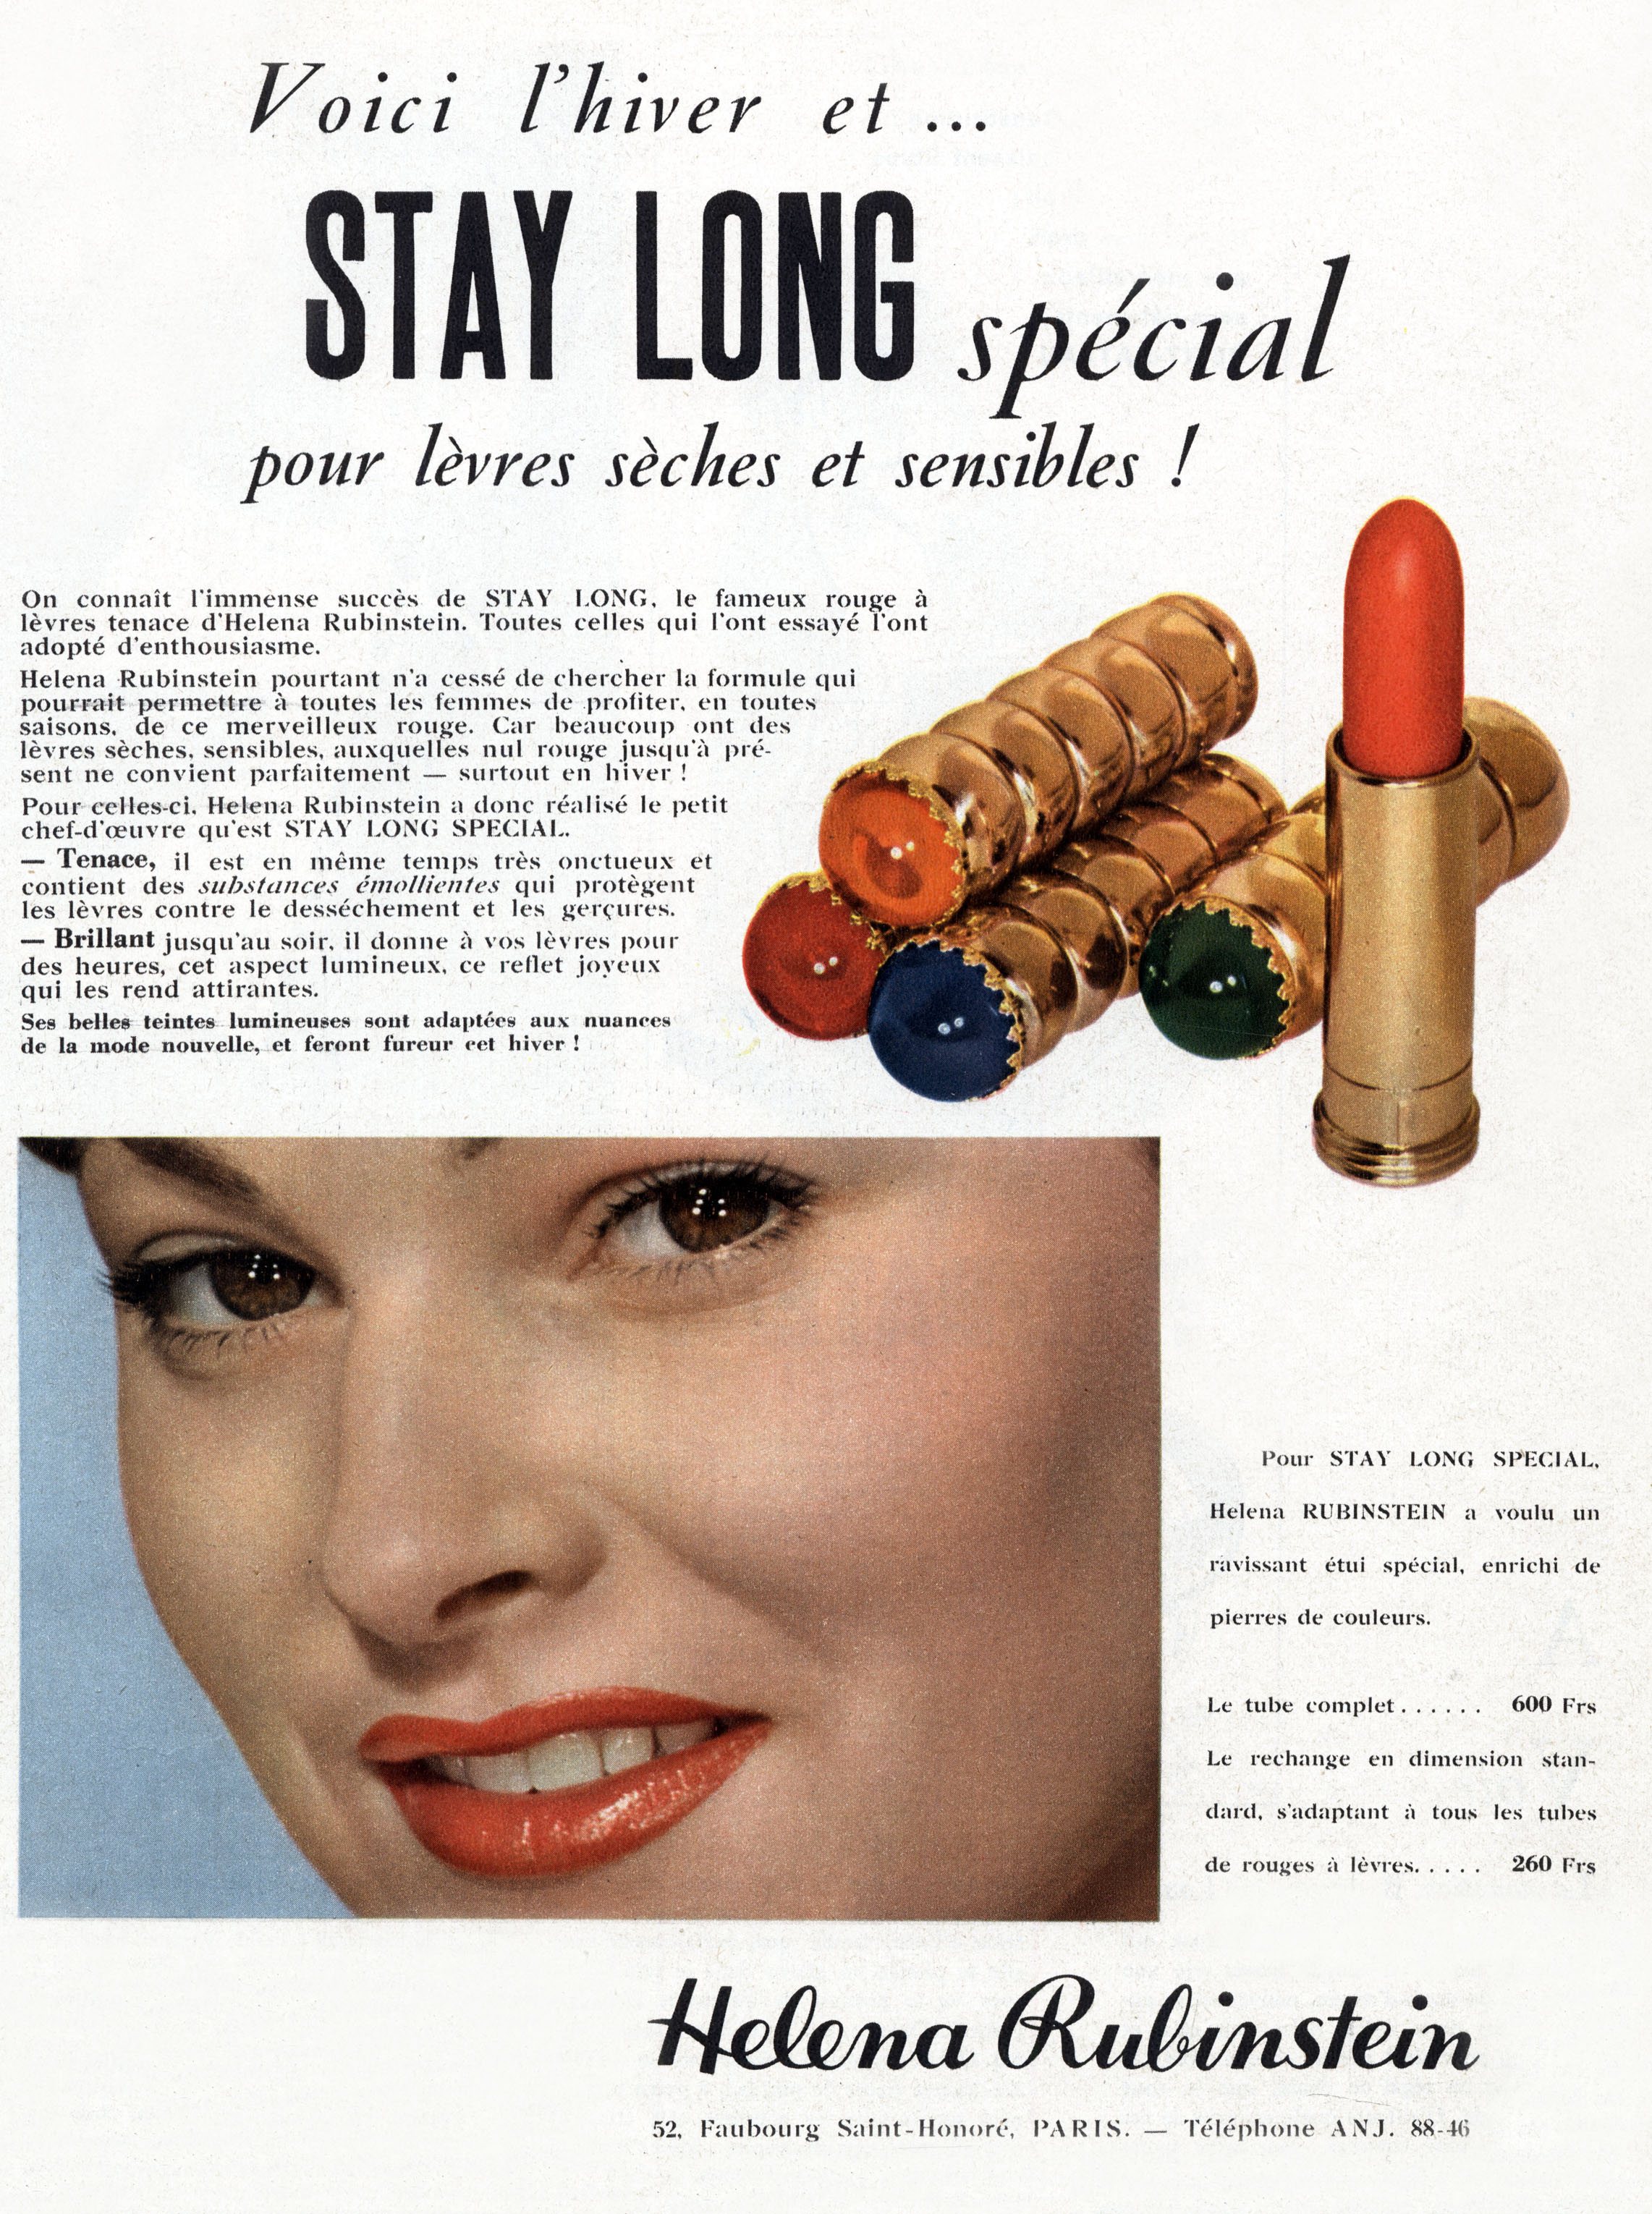 French advertisement for Helena Rubinstein lipstick, 1952